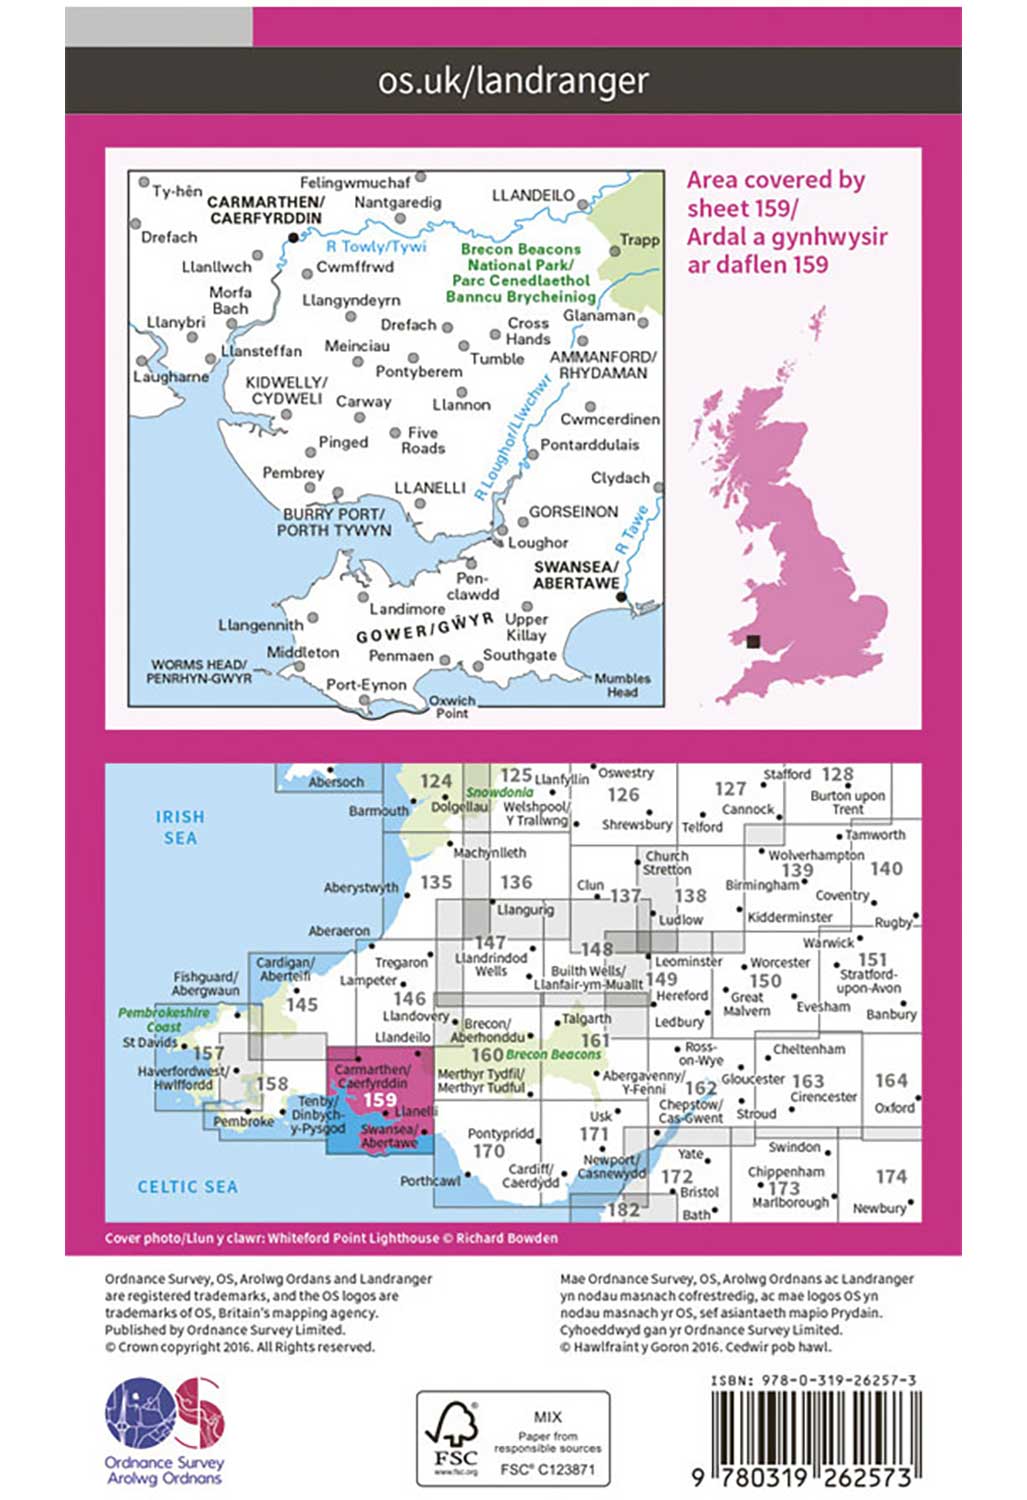 Ordnance Survey Swansea & Gower, Carmarthen - Landranger 159 Map